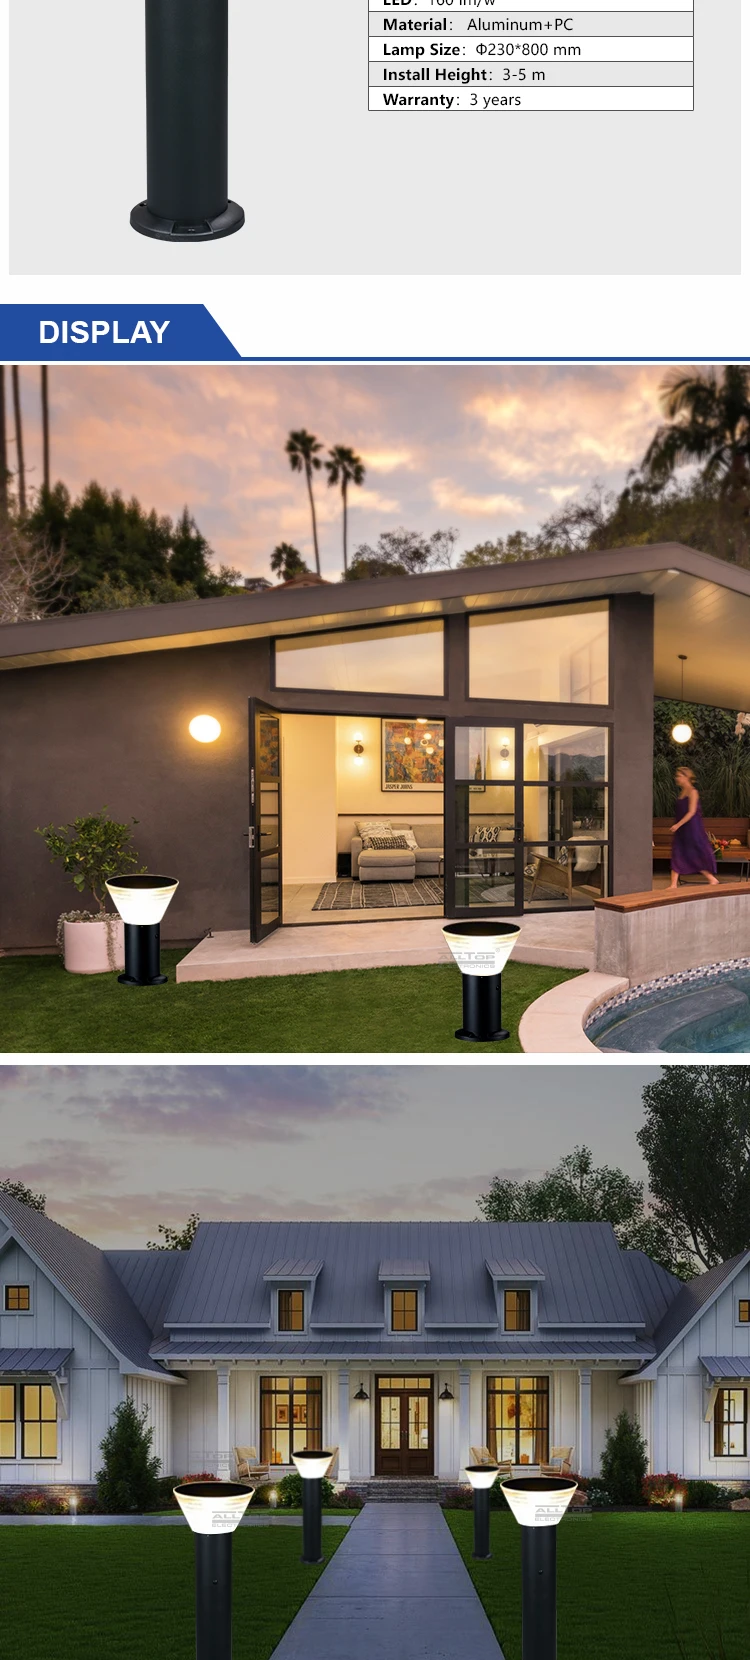 Free sample IP65 waterproof outdoor lighting smd 5w led solar garden light